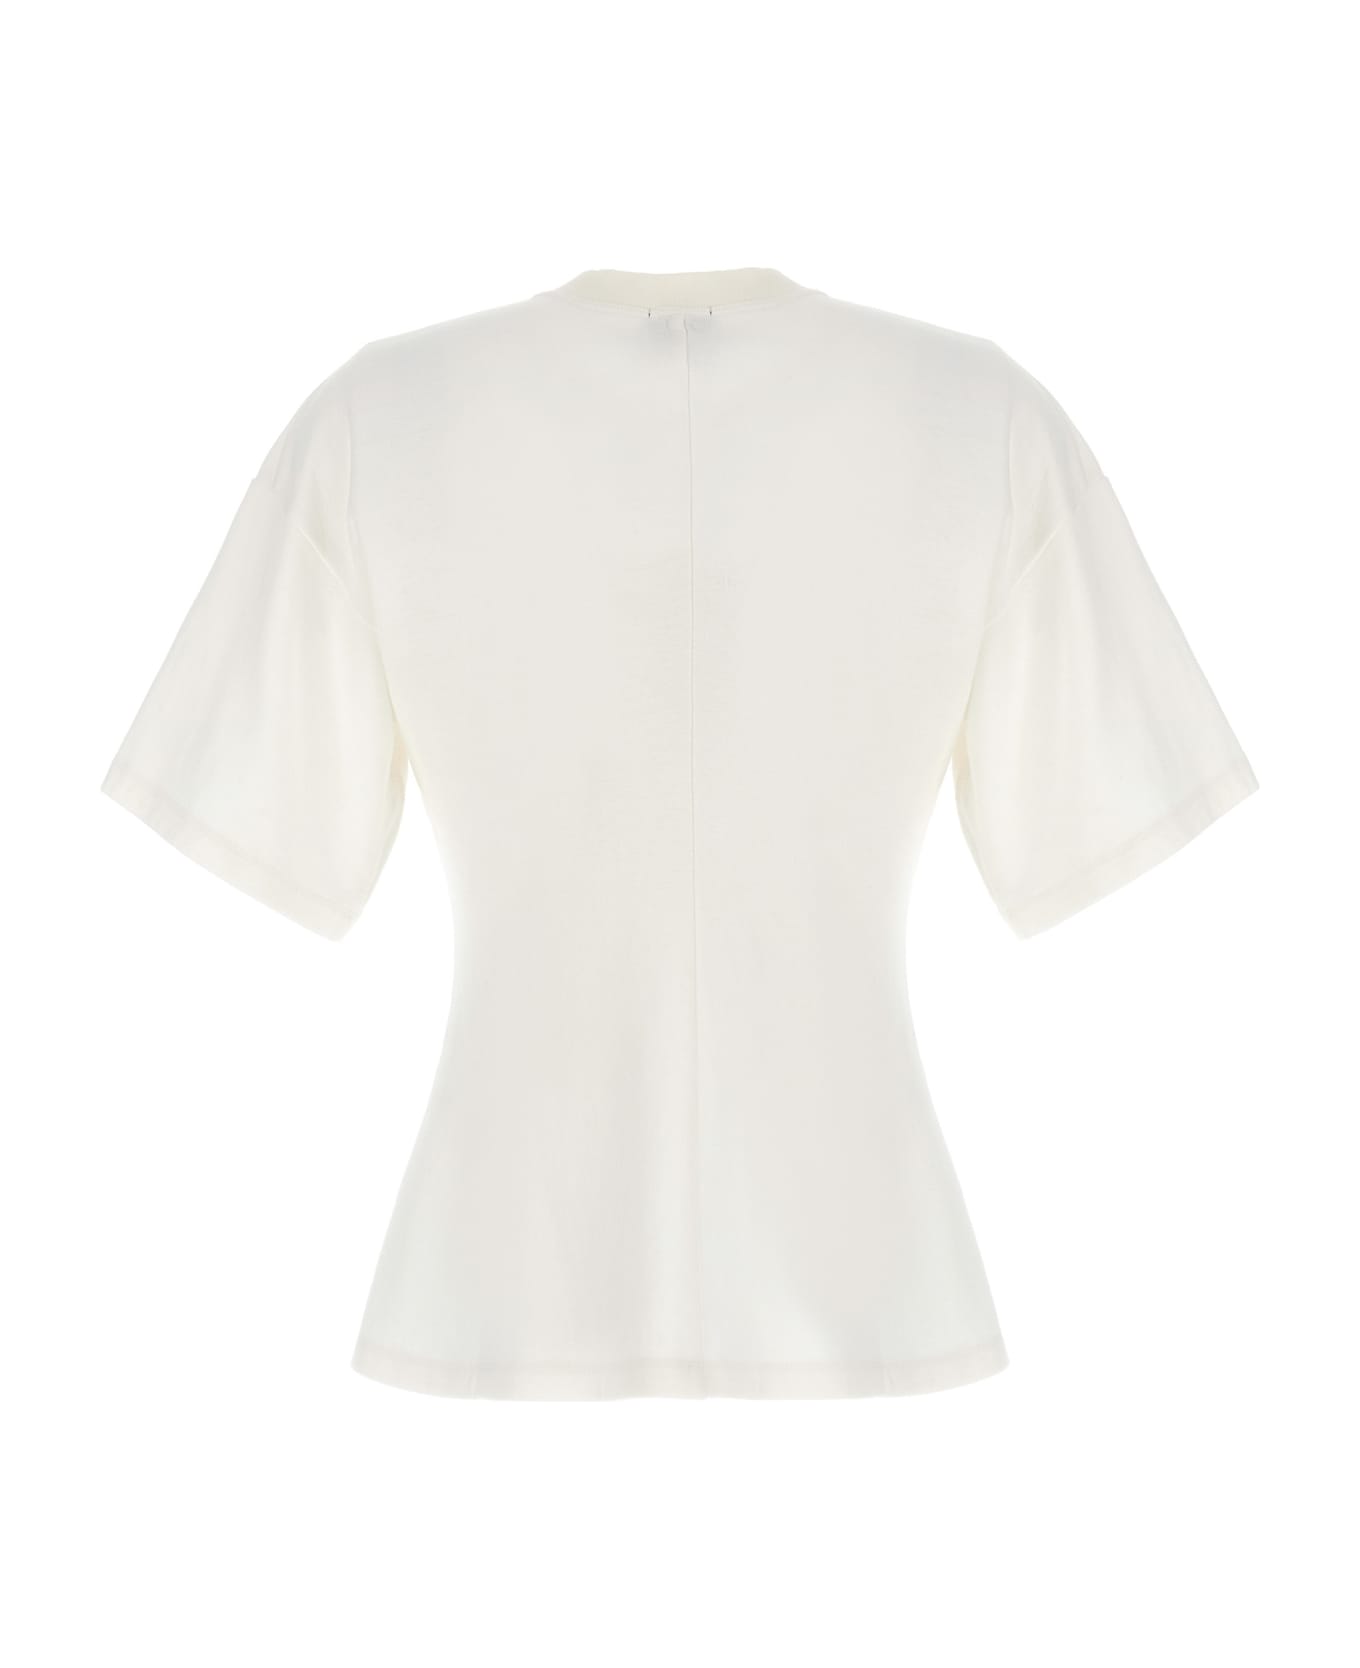 Proenza Schouler 'waisted' T-shirt - White Tシャツ